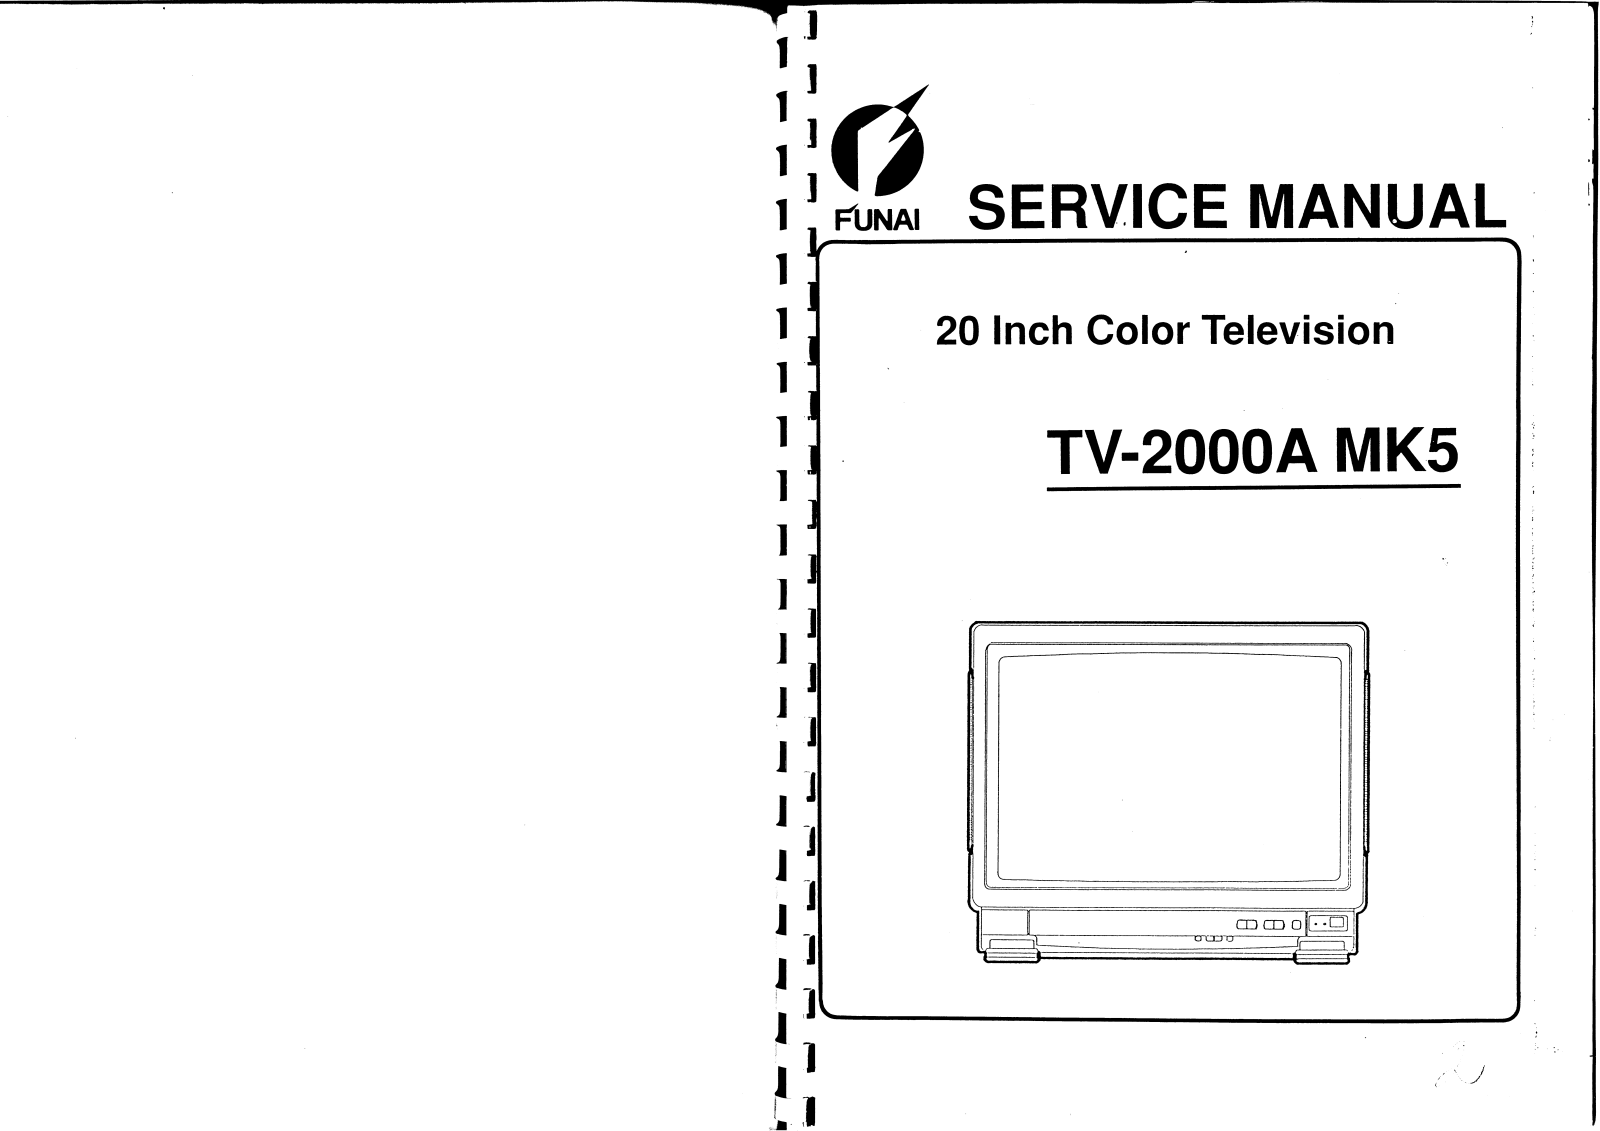 Funai TV-2000A MK5 Service manual